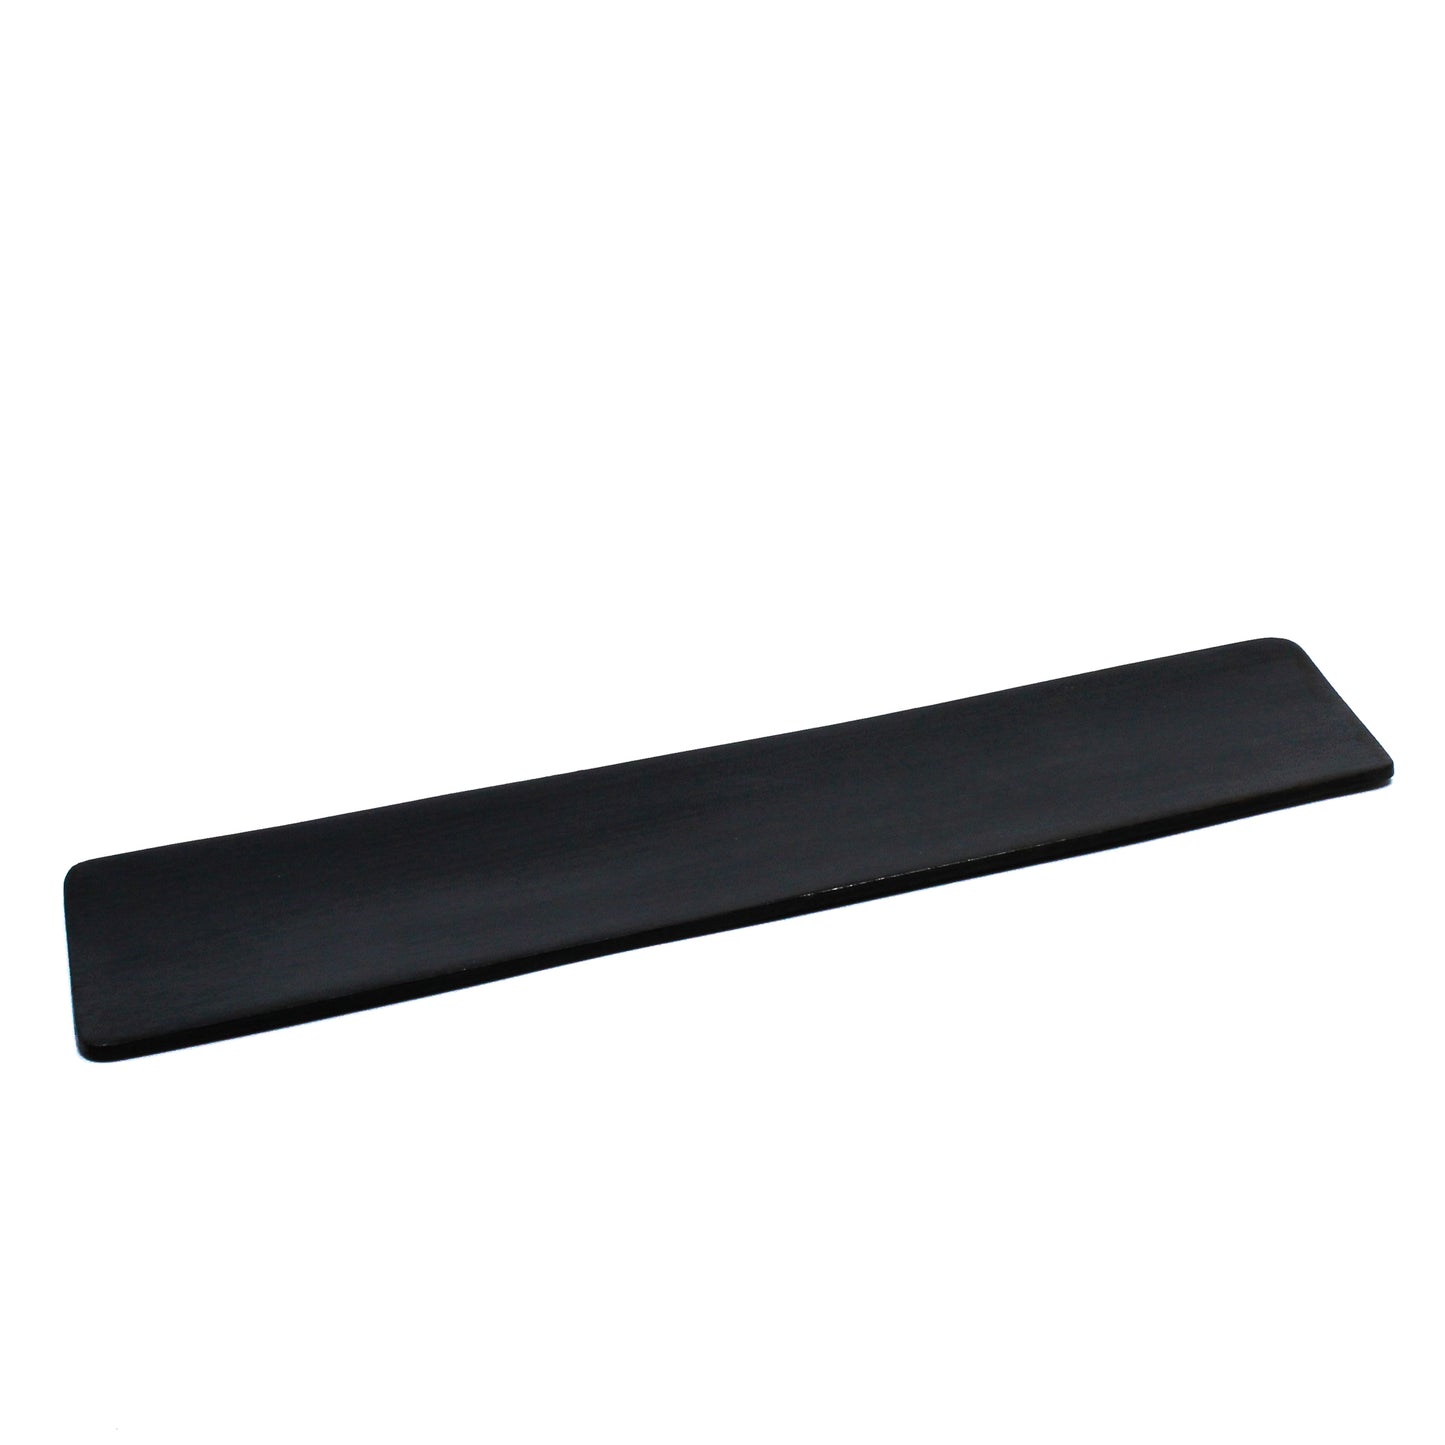 Long thin black sushi tray